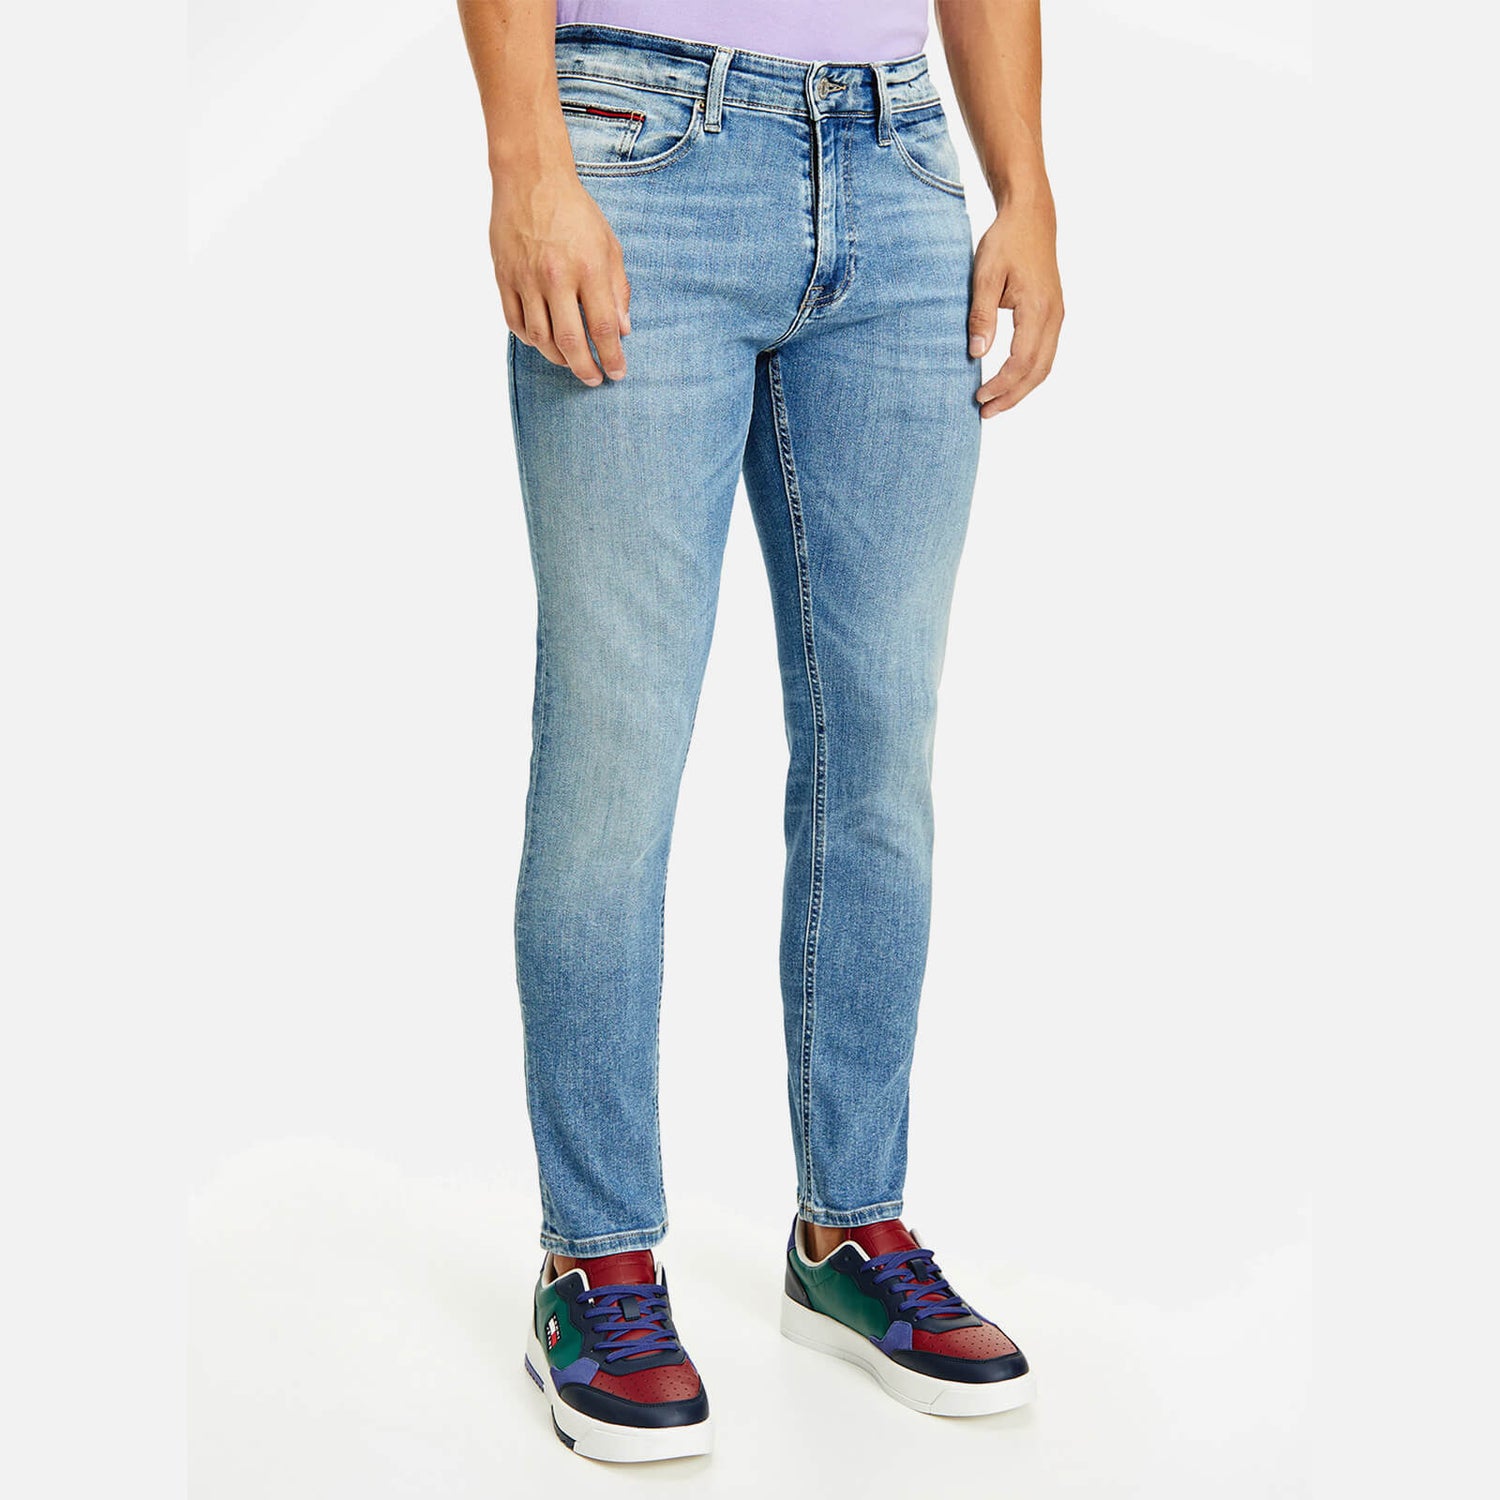 Tommy Jeans Men's Austin Slim Tapered Jeans - Denim Light - W32/L34